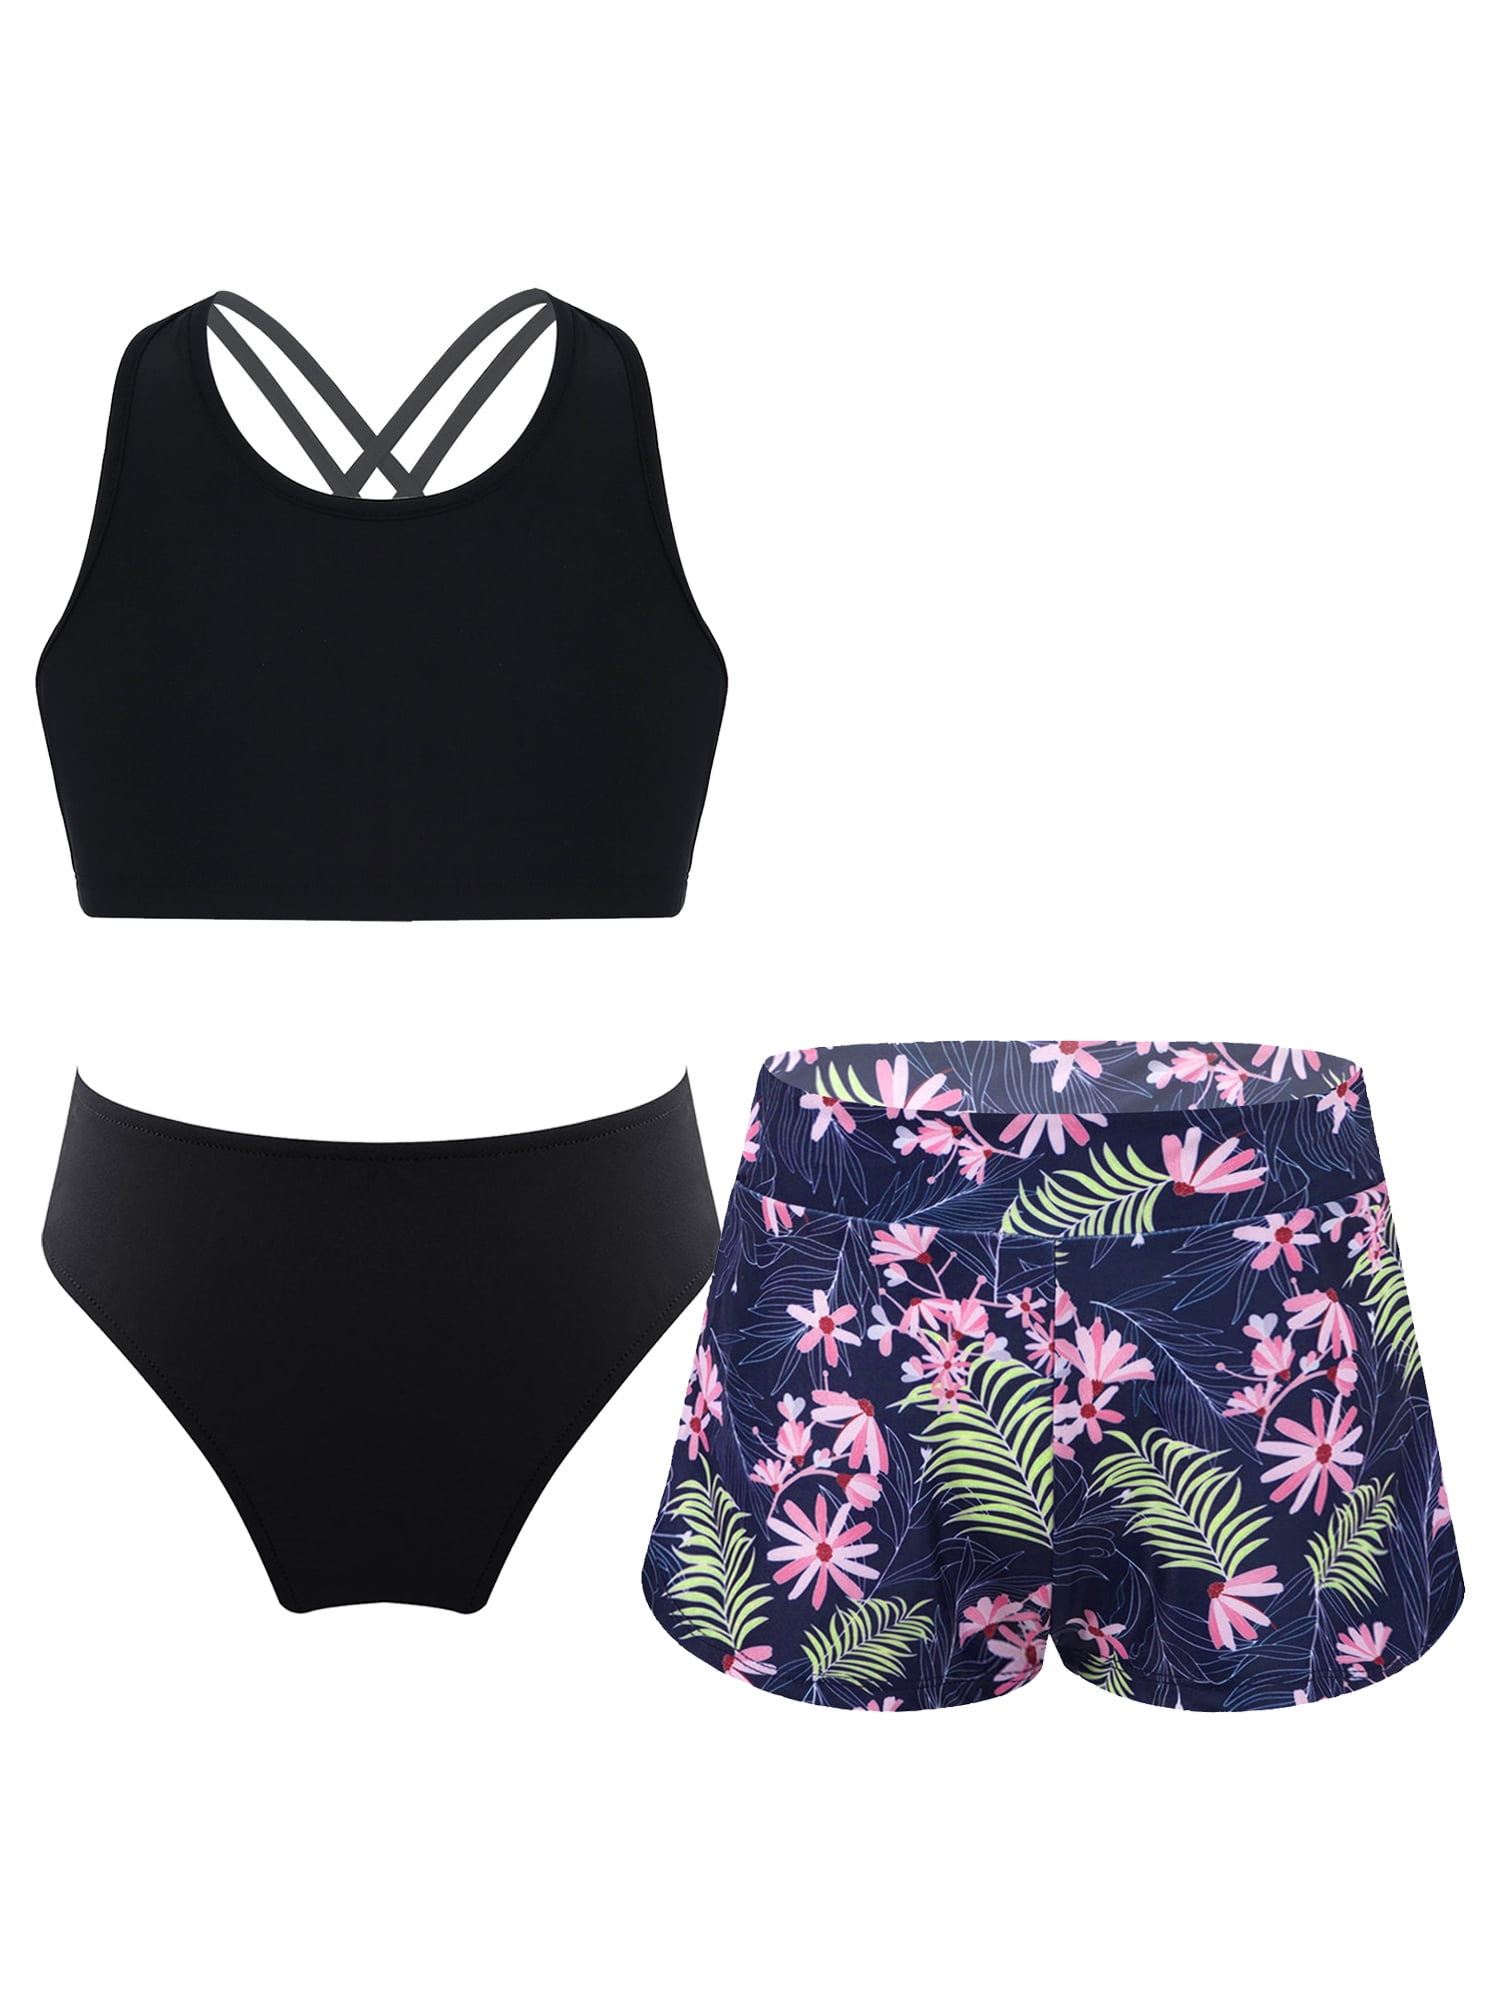 TiaoBug Girls 3 Piece Swimsuit Athletic Bikini Suit Tropical Print ...